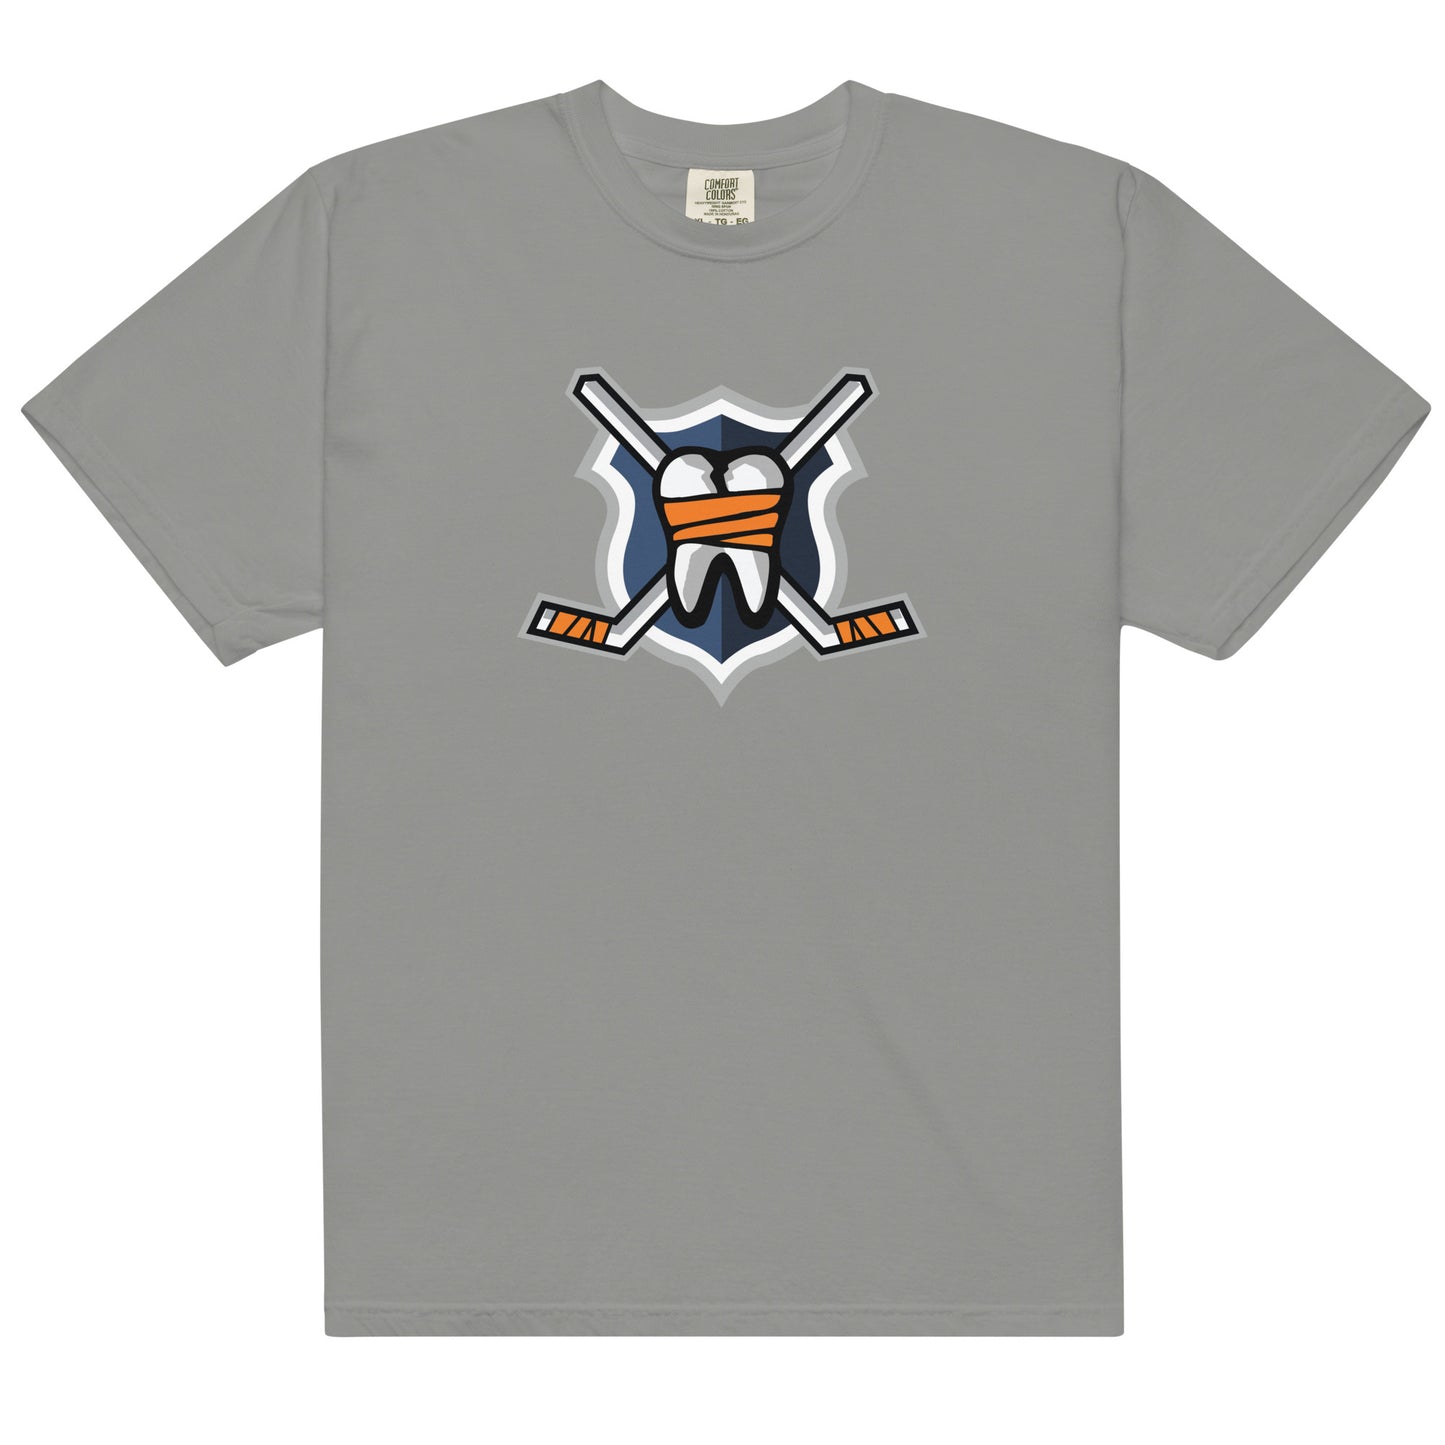 THE CLASSICS - Hockey Fights Full Chest T-Shirt